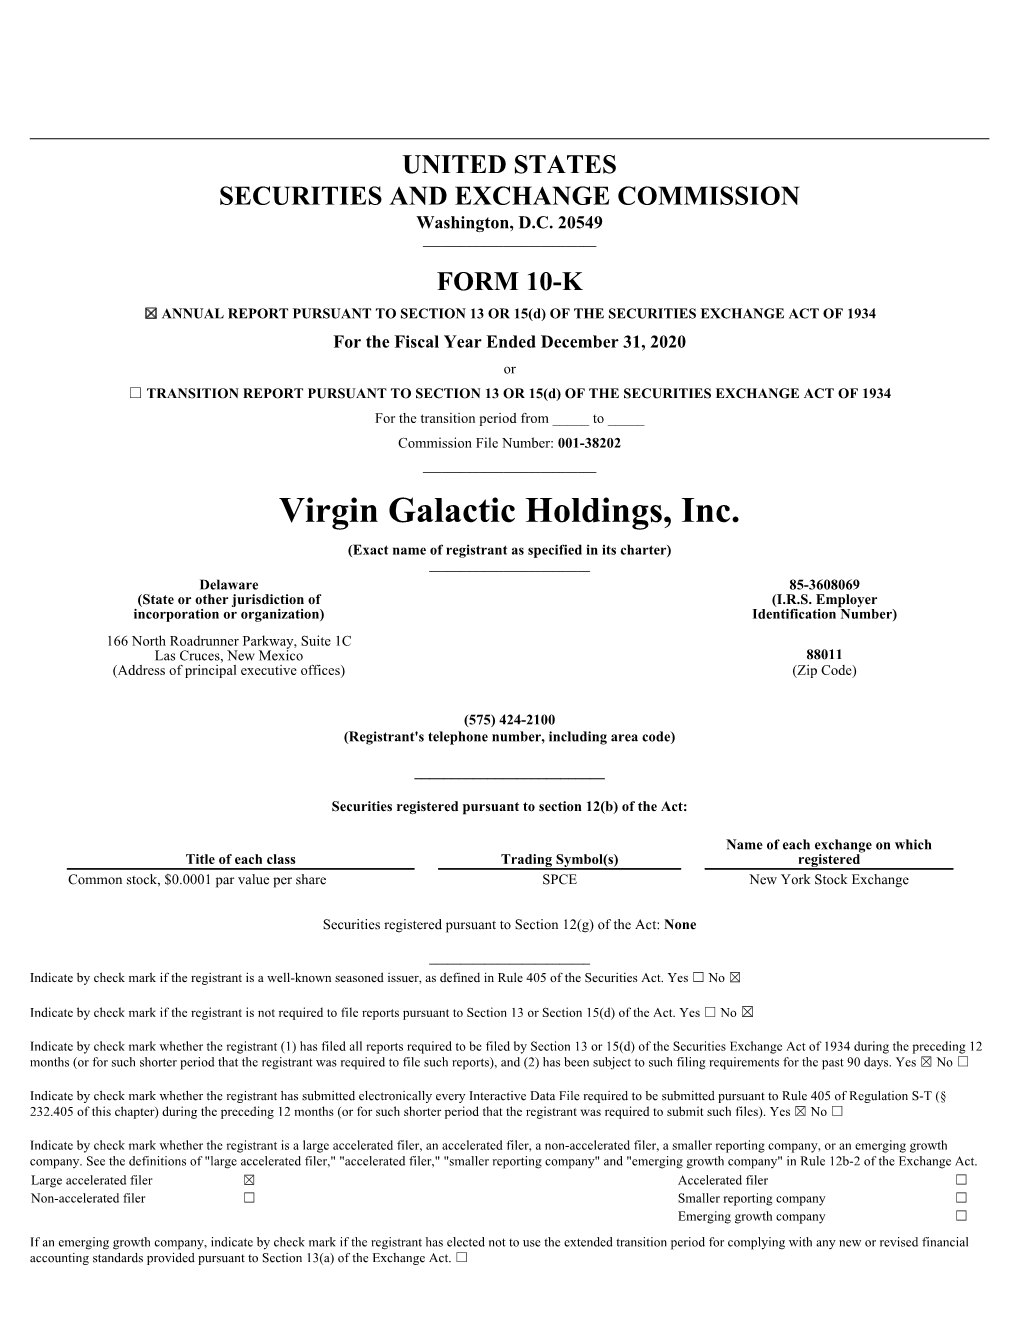 Virgin Galactic Holdings, Inc